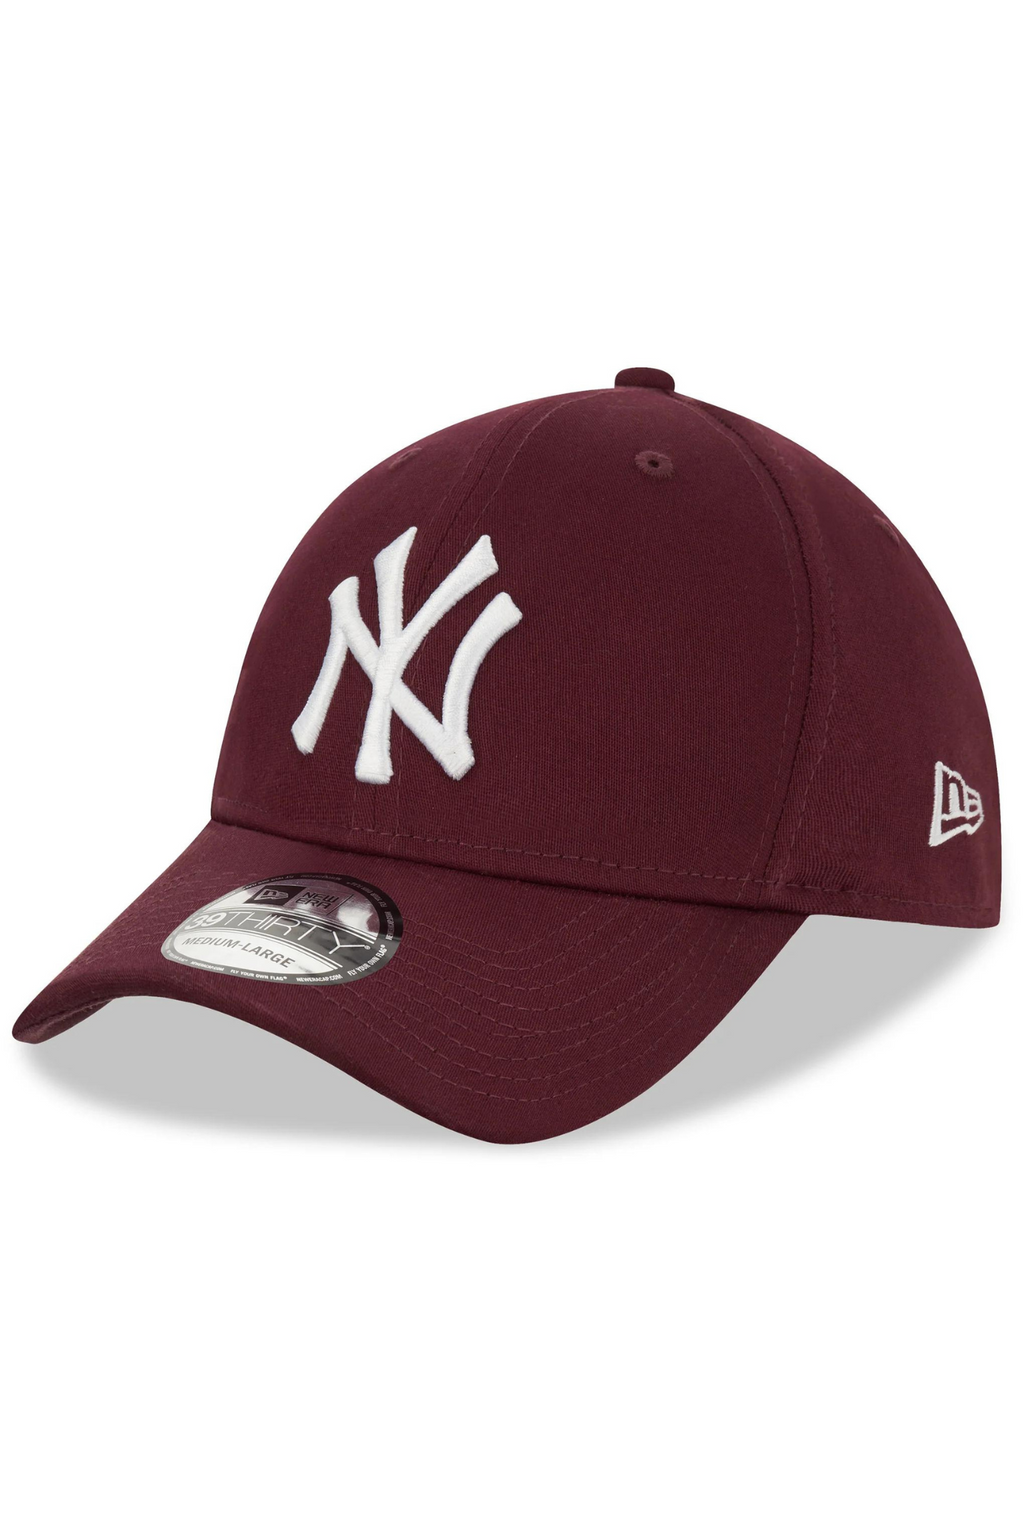 New Era New York Yankees Classic 39THIRTY Stretch-Fit Cap Wine Red